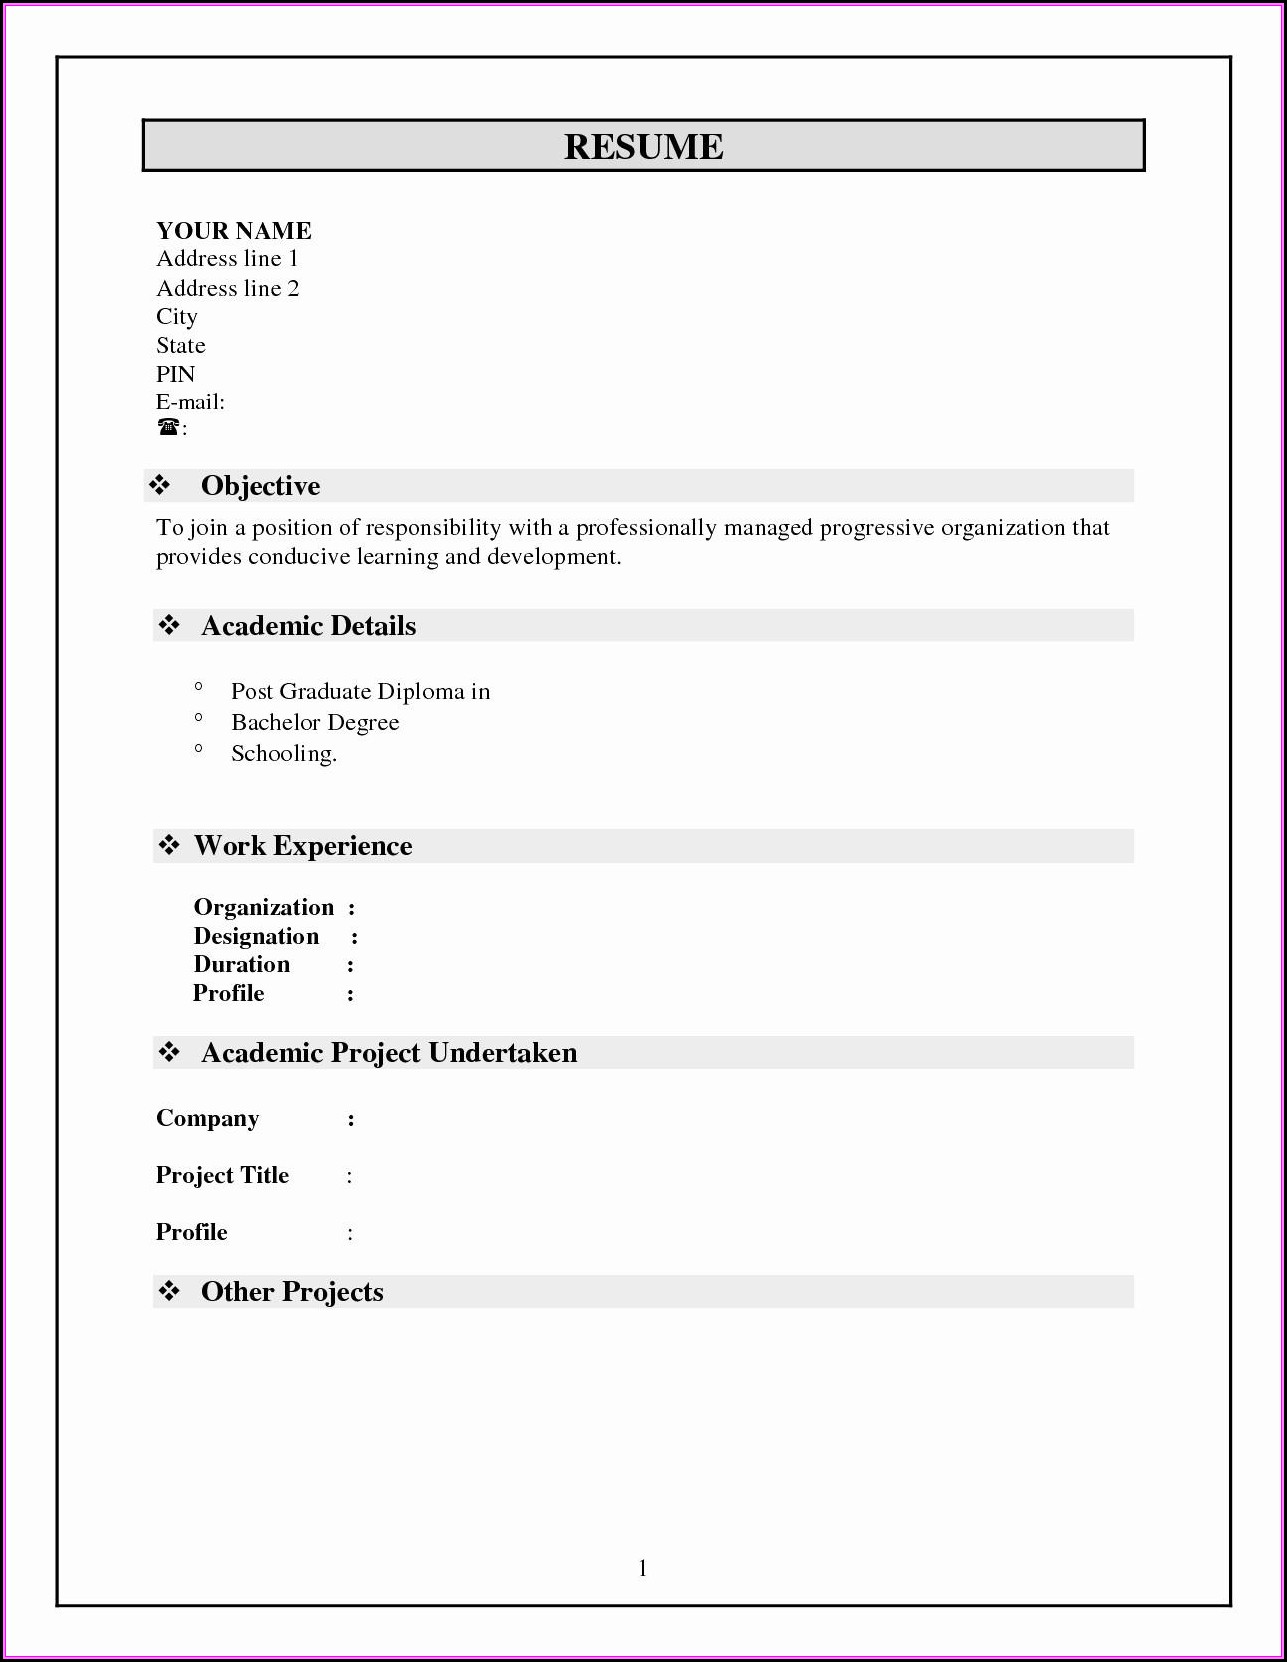 Resume Format Doc Free Download